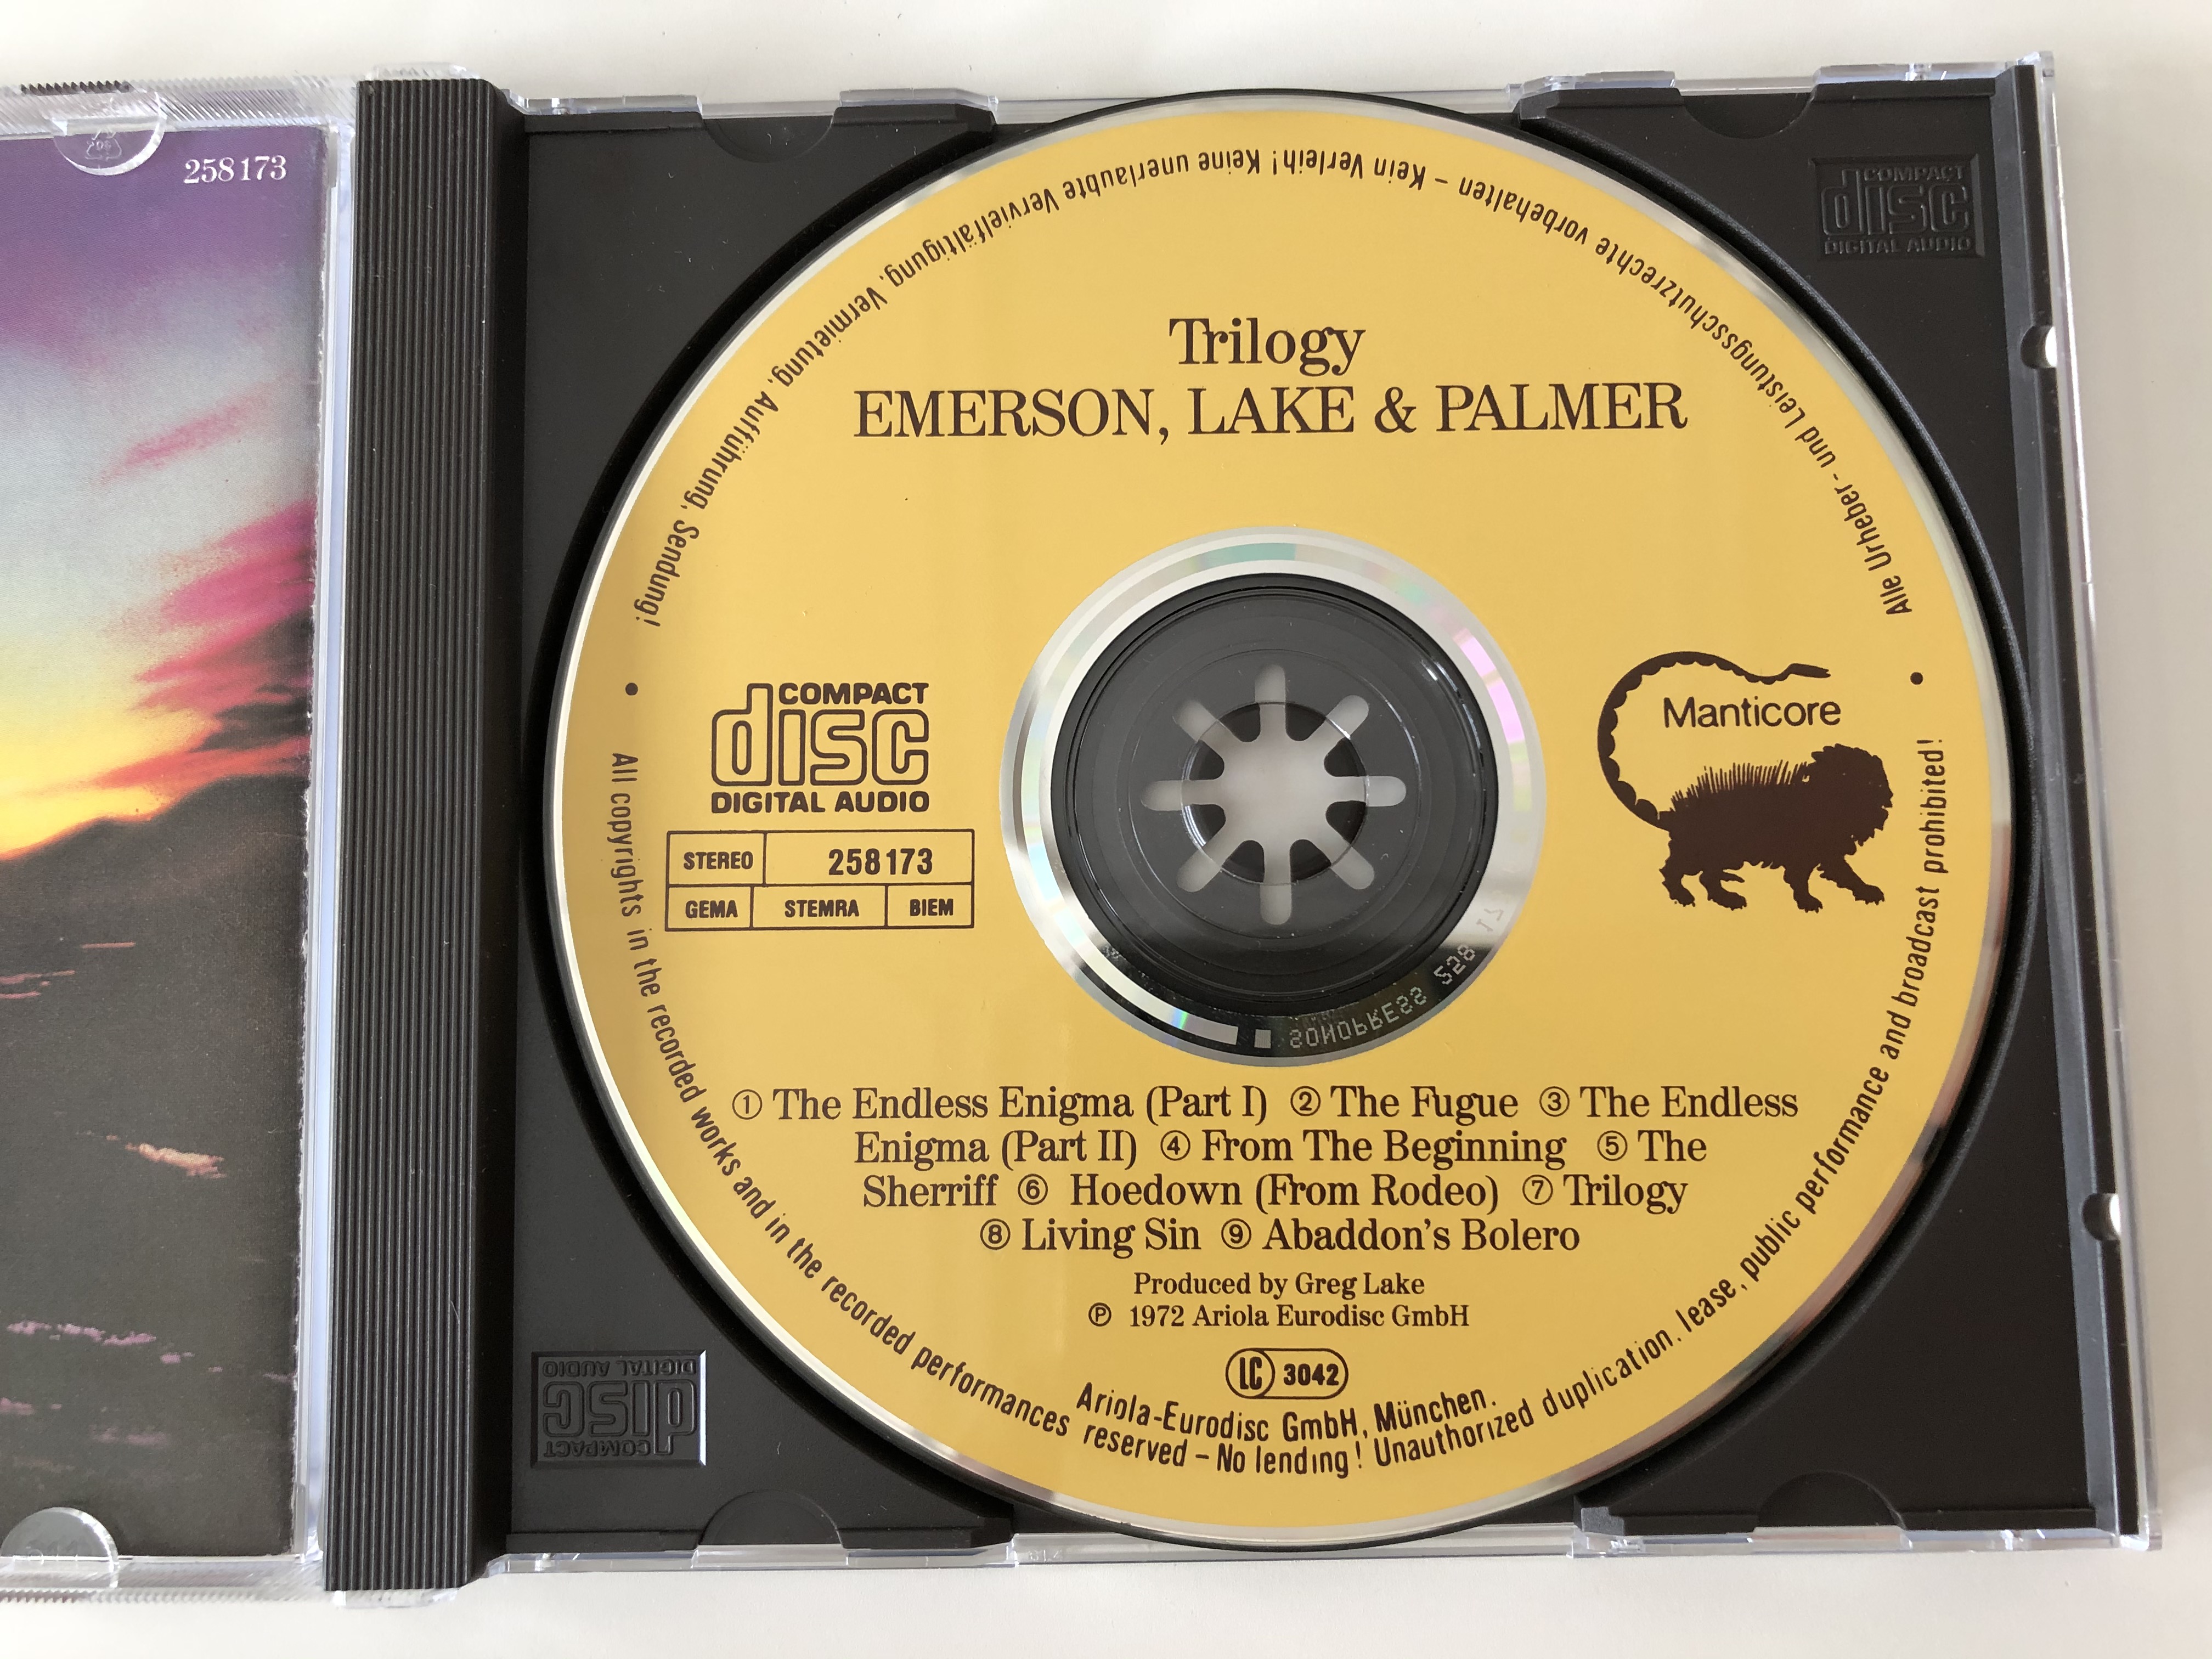 emerson-lake-palmer-trilogy-manticore-audio-cd-stereo-258-173-222-3-.jpg